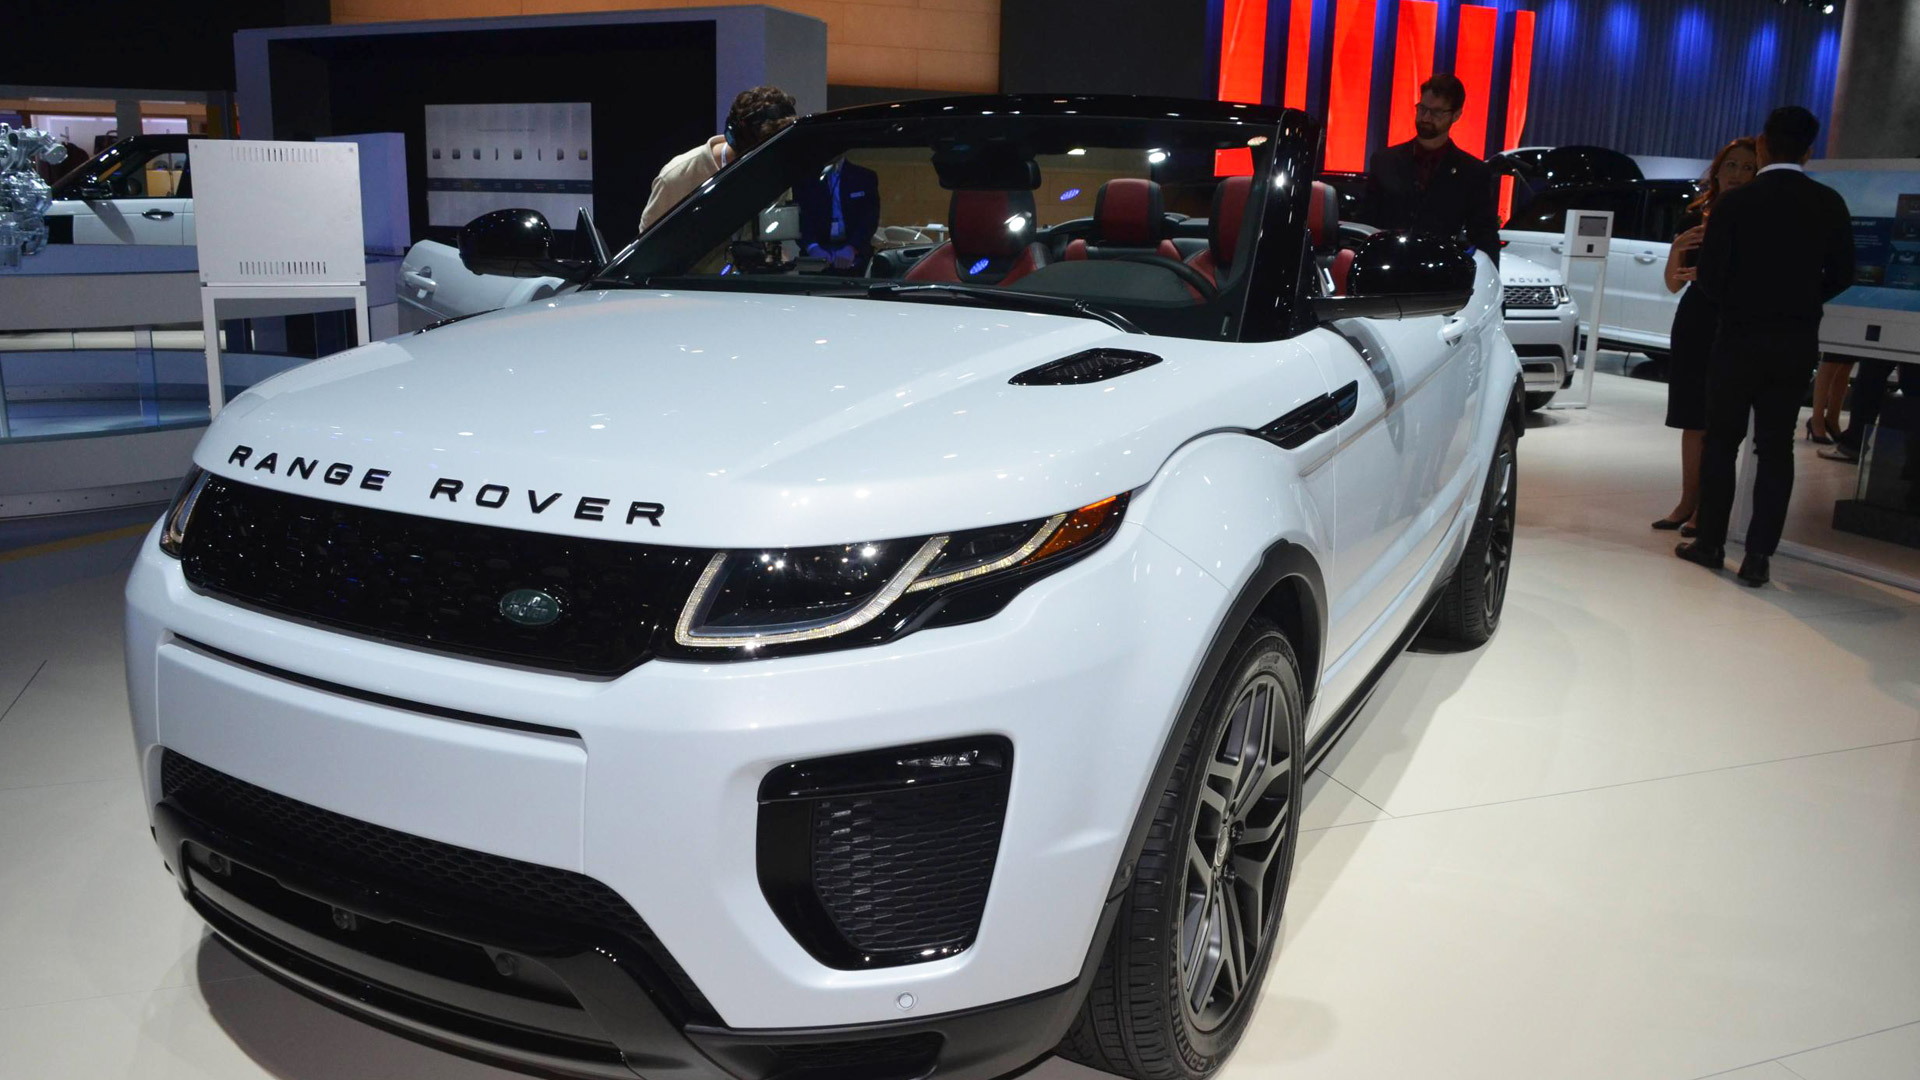 2017 Land Rover Range Rover Evoque Convertible, 2015 Los Angeles Auto Show